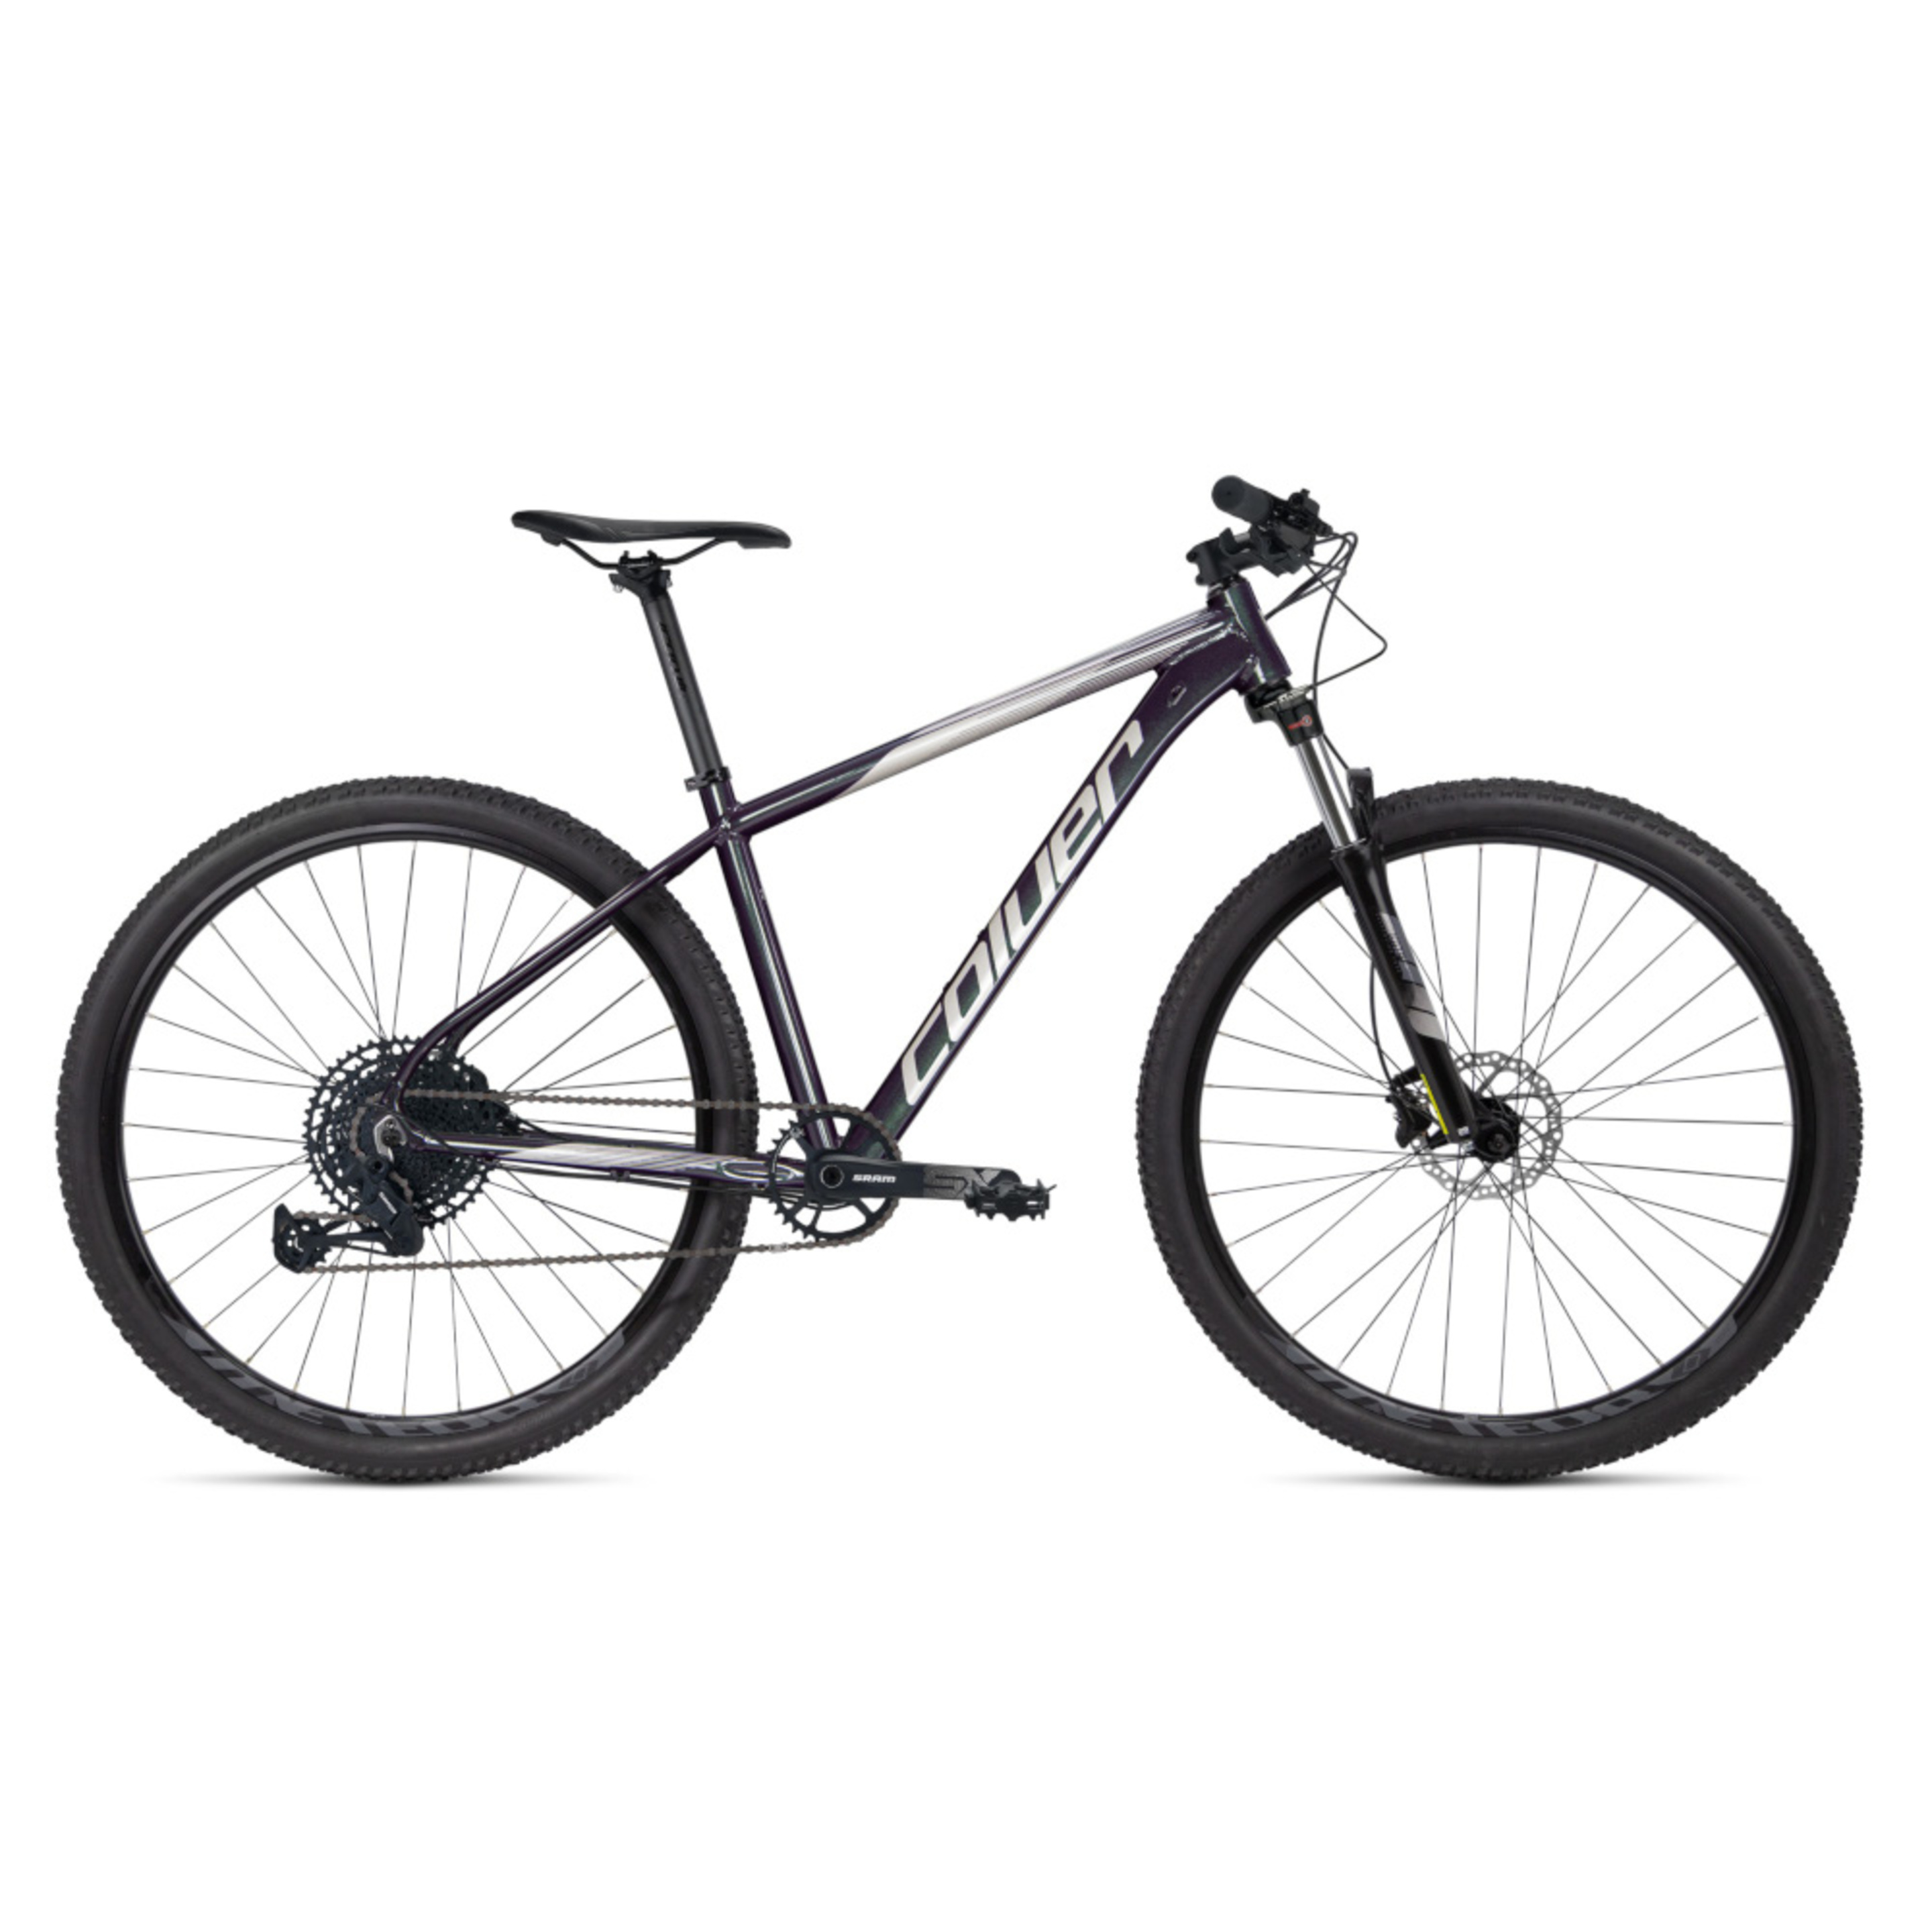 Mountain Bike 29" Coluer Limbo 296 - purpura - 